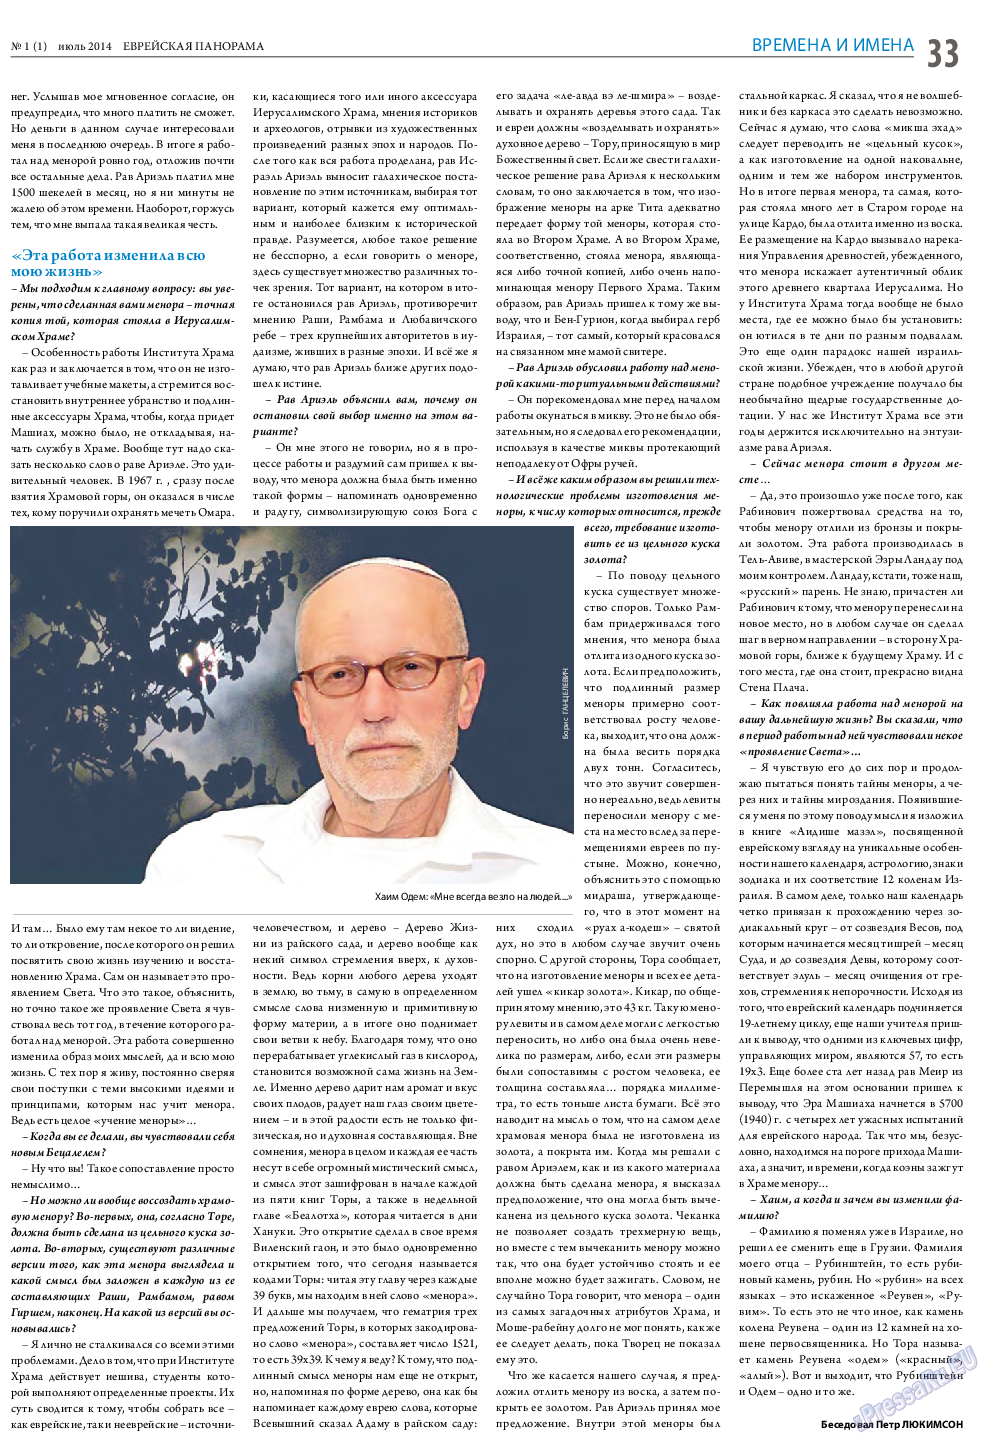 Еврейская панорама, газета. 2014 №1 стр.33